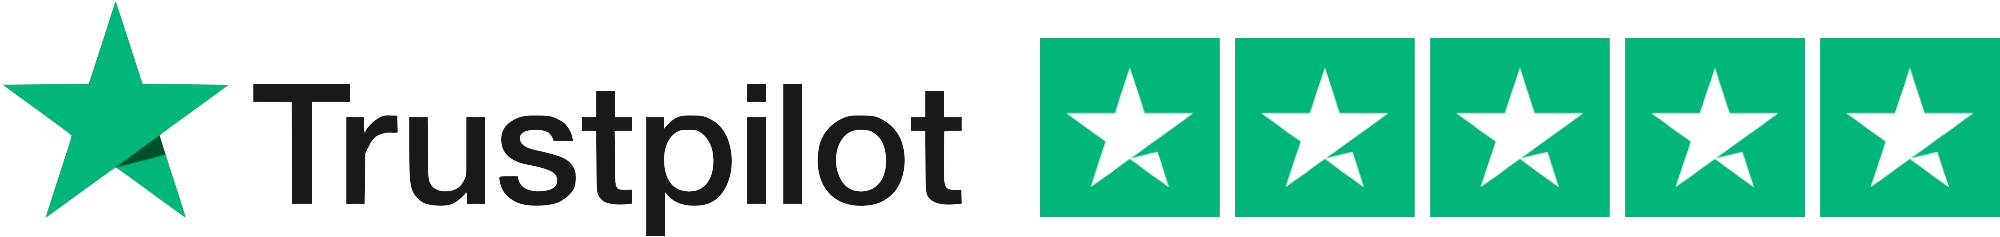 Trustpilot reviews five-star logo